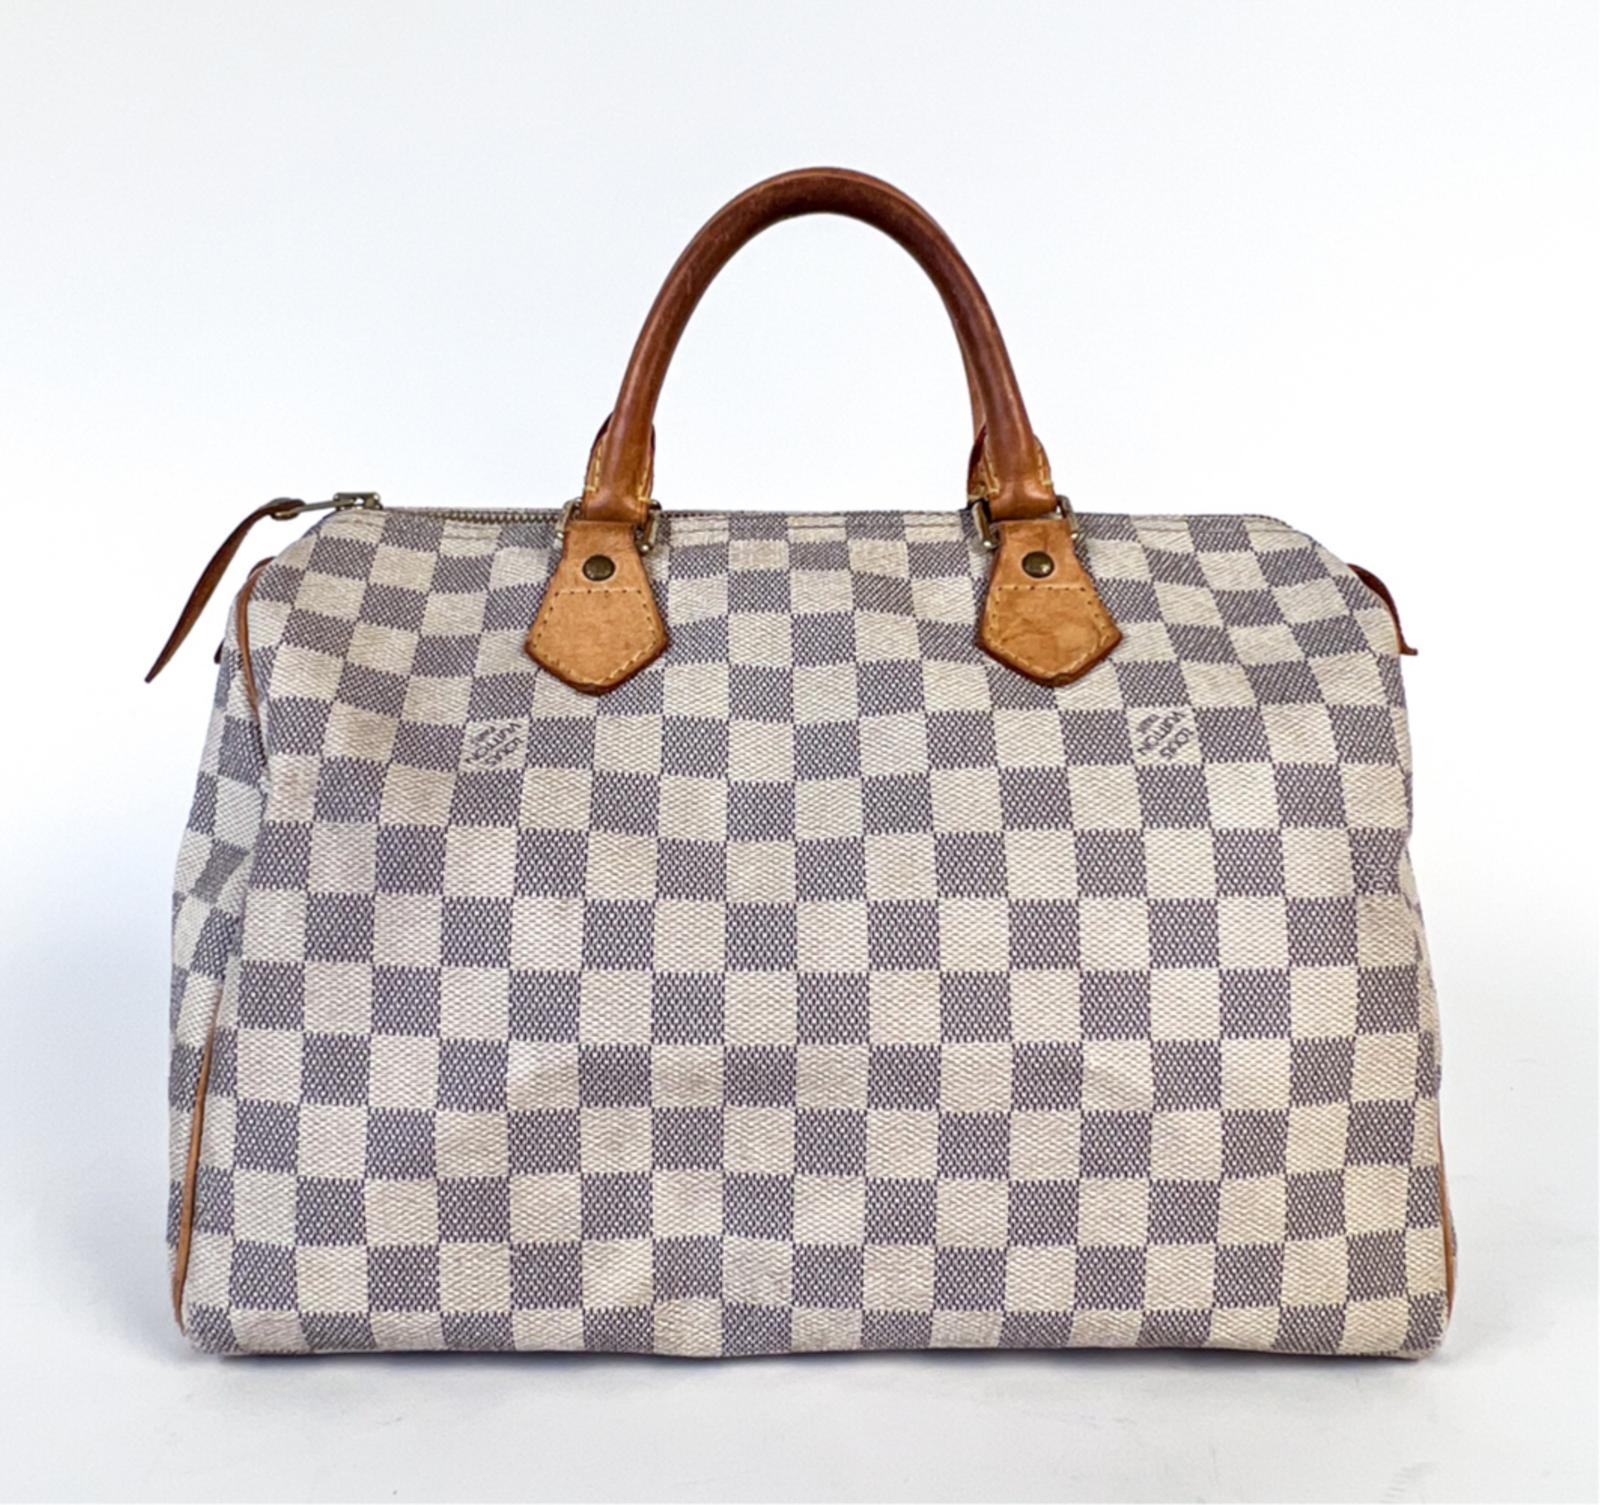 Sold at Auction: Louis Vuitton, Vintage bag by Louis Vuitton model, Speedy  30